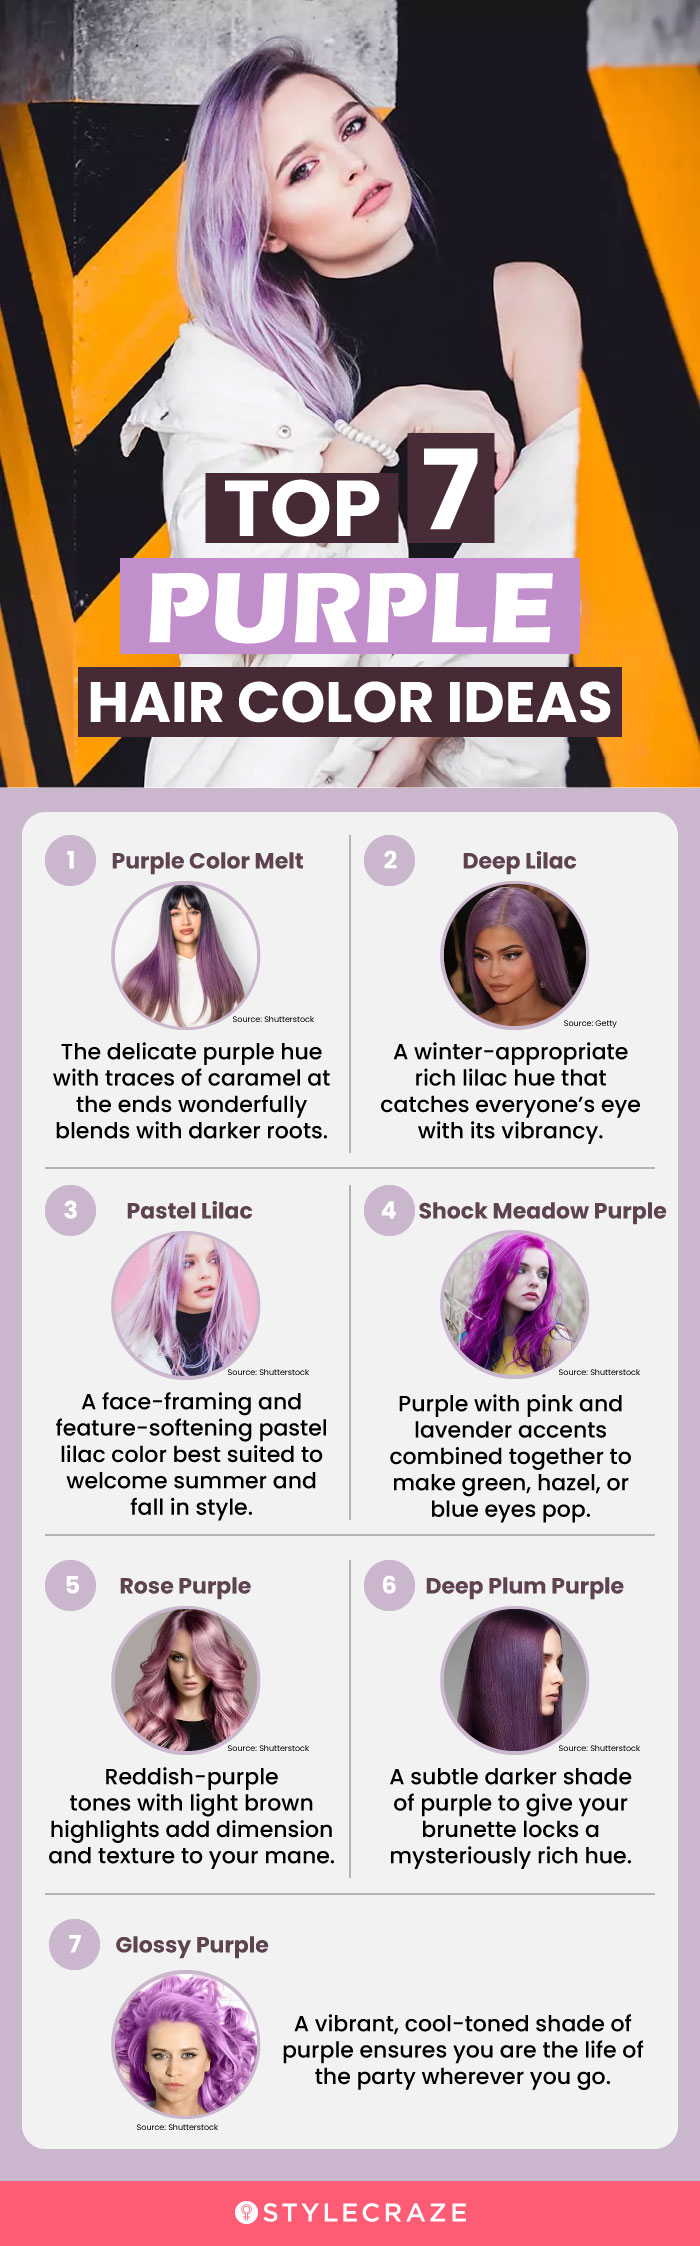 top 7 purple hair color ideas(infographic)